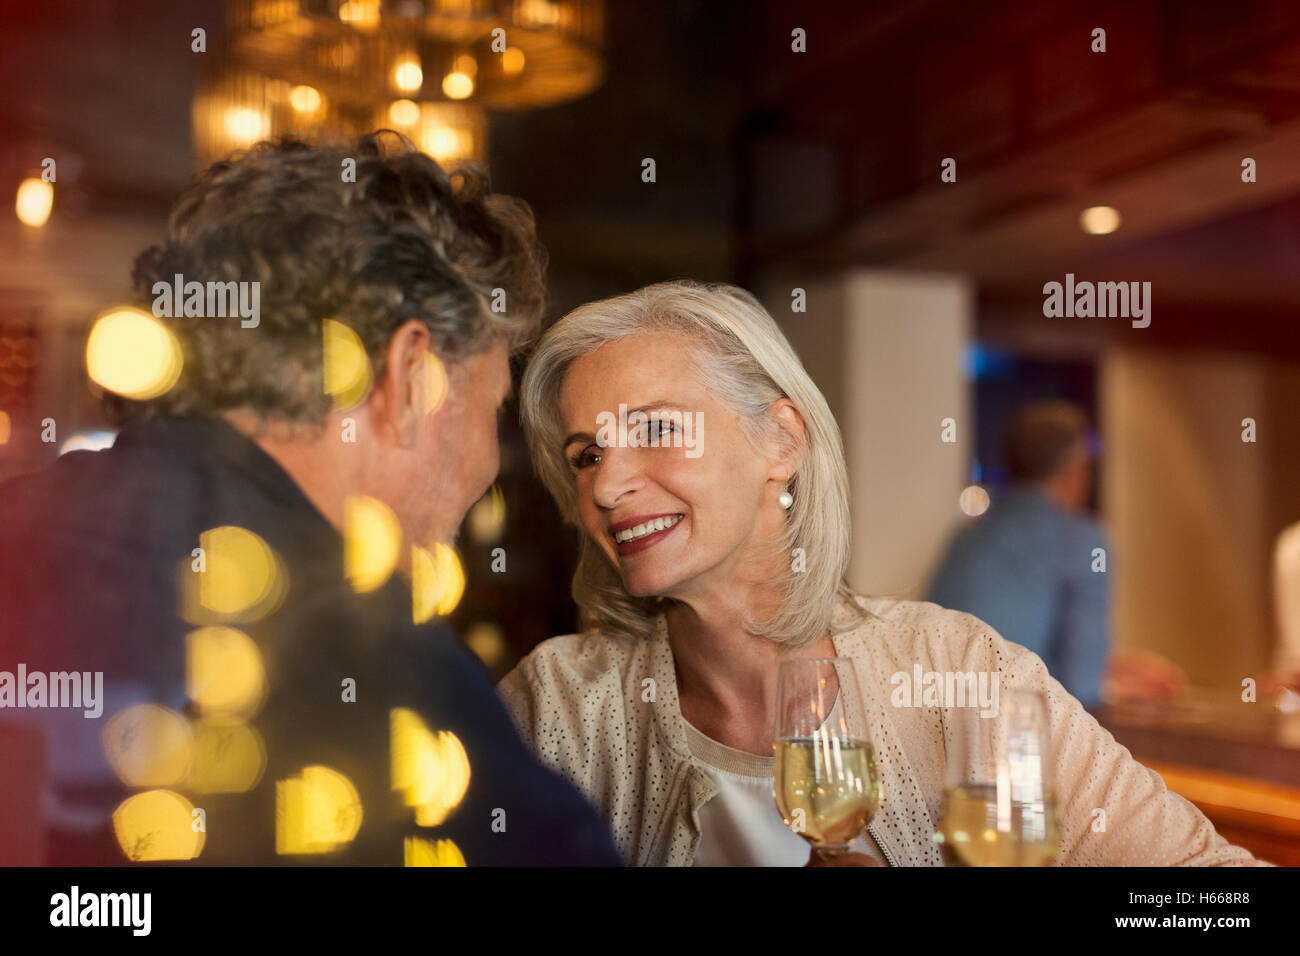 Affectionate smiling senior couple drinking white wine in bar Stock Photo